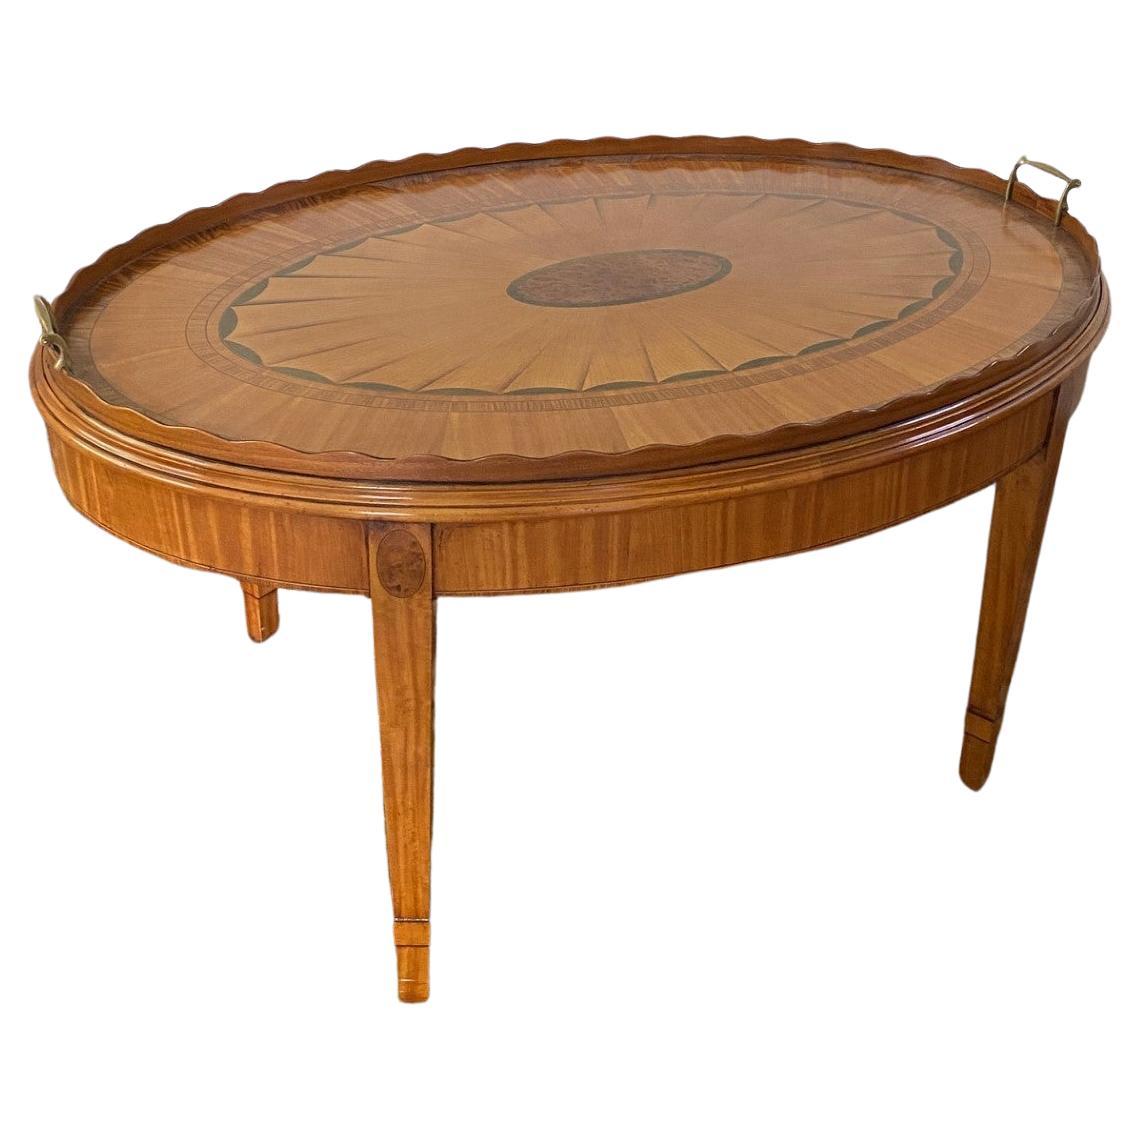 Table à plateau incrusté de bois de style Sheraton et Hogan Sheraton, en stock